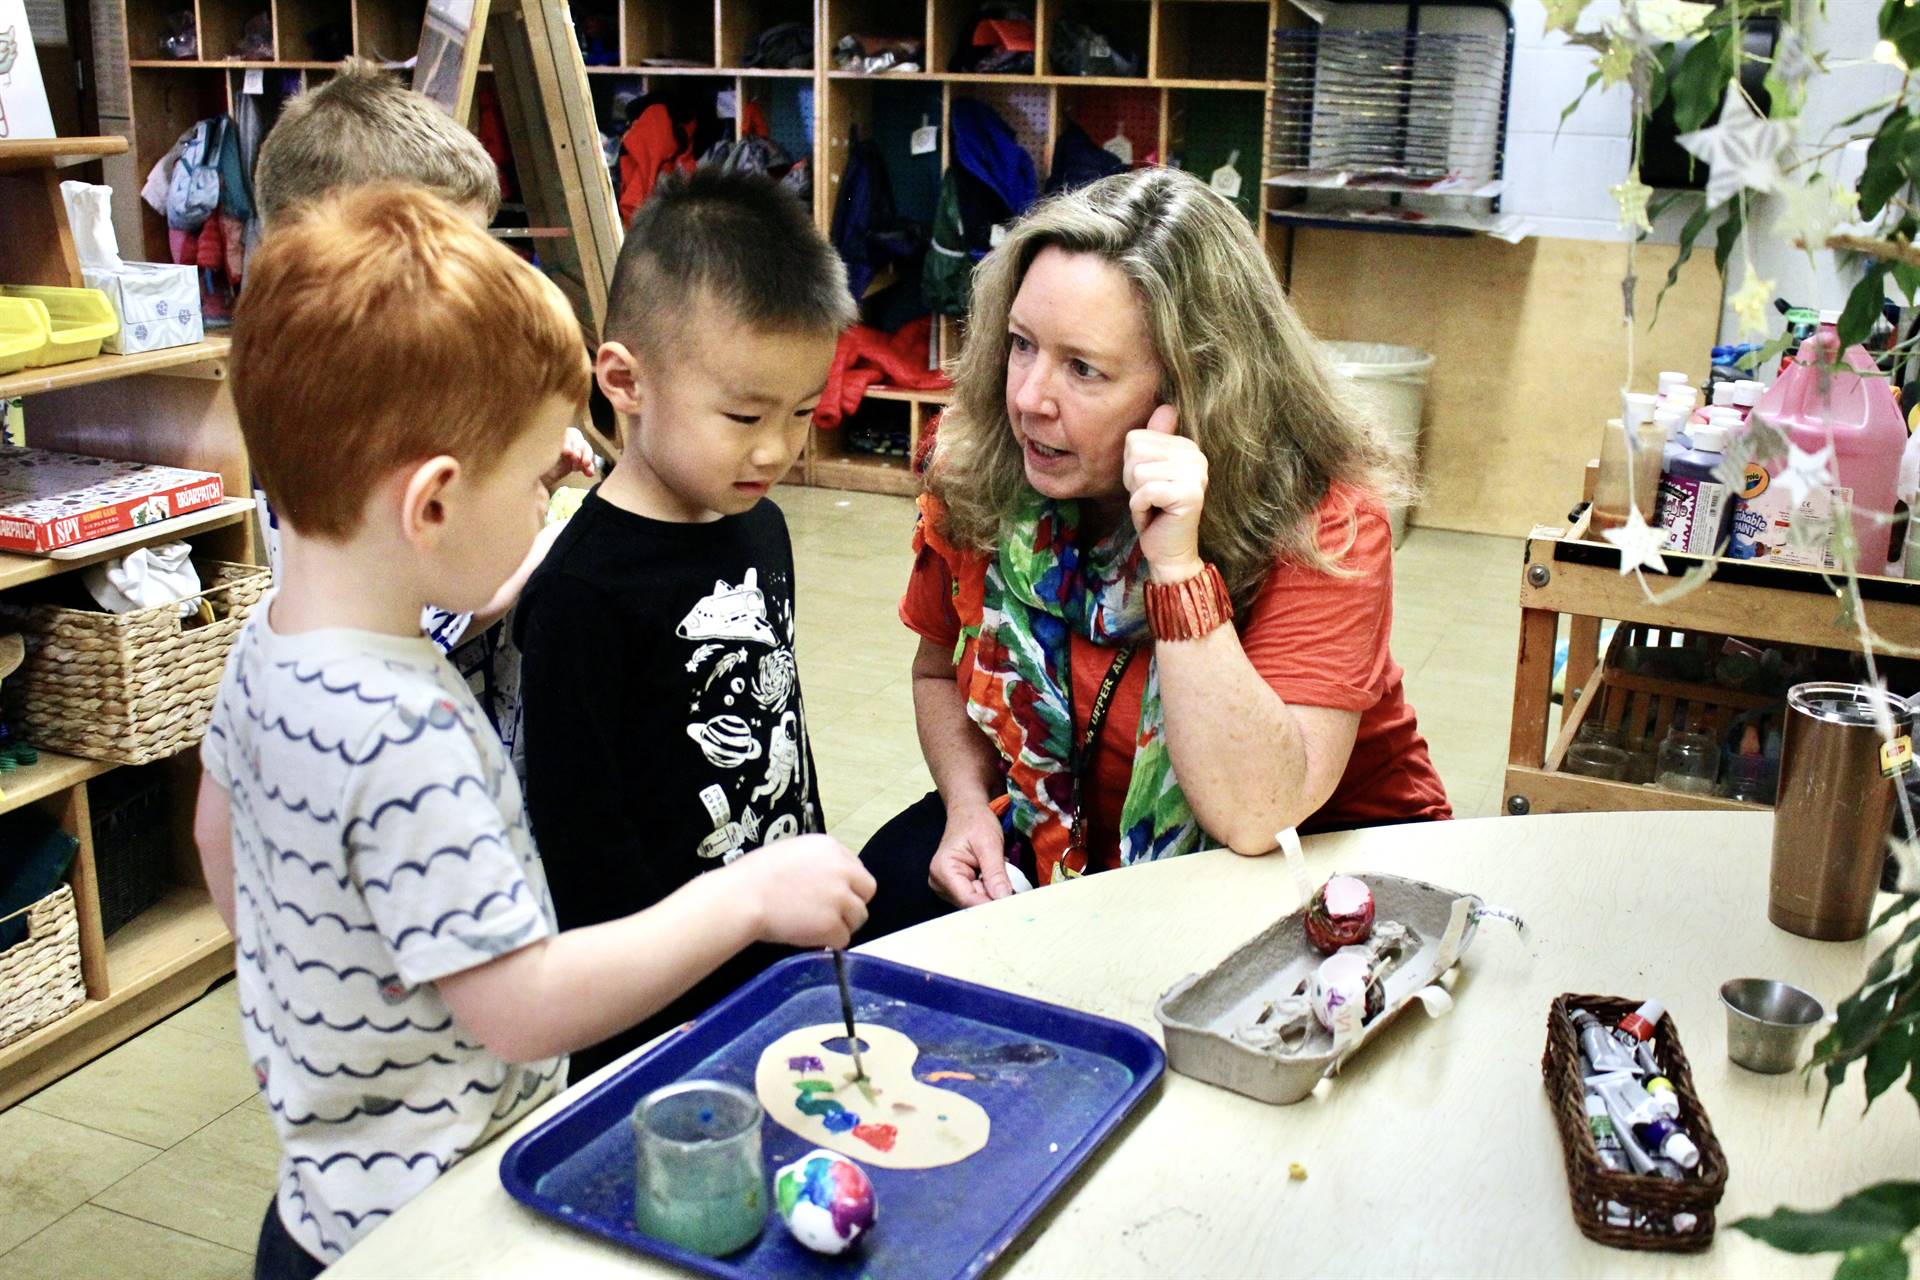 A teacher helping two preschool students with an art activity